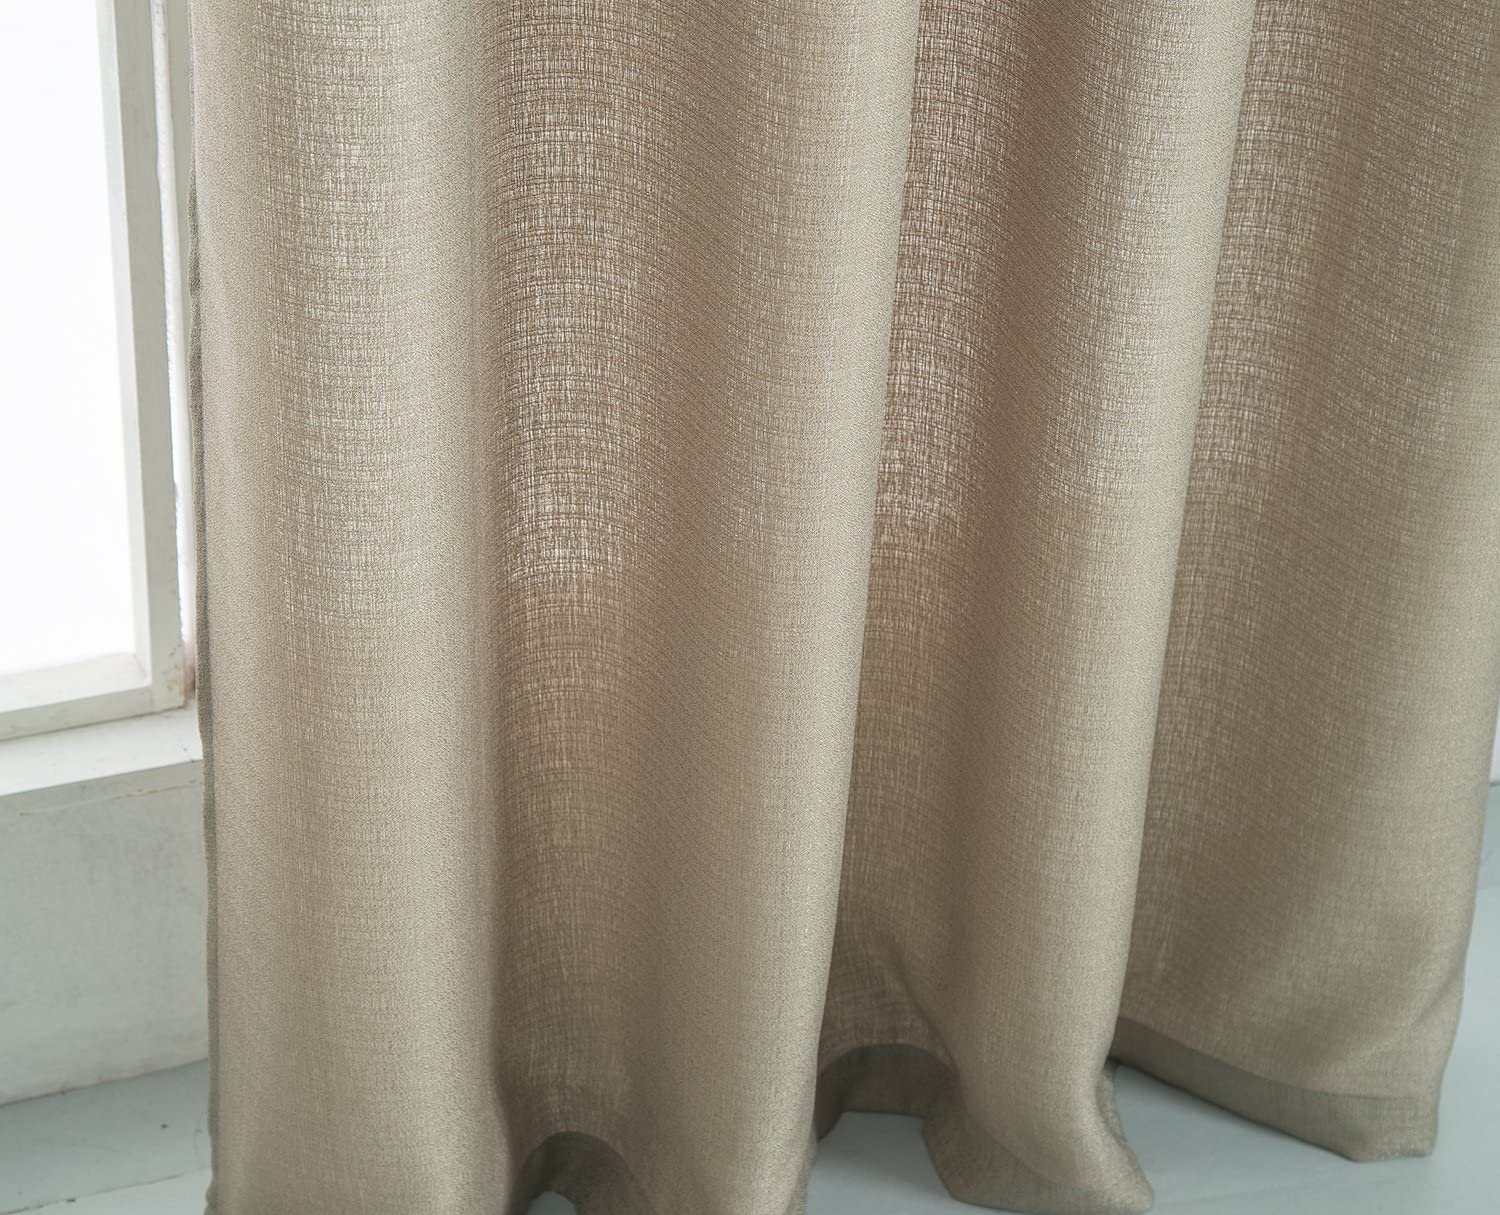 Layne Textured 54 x 90 in. Single Grommet Curtain Panel - Linen Universe Co.